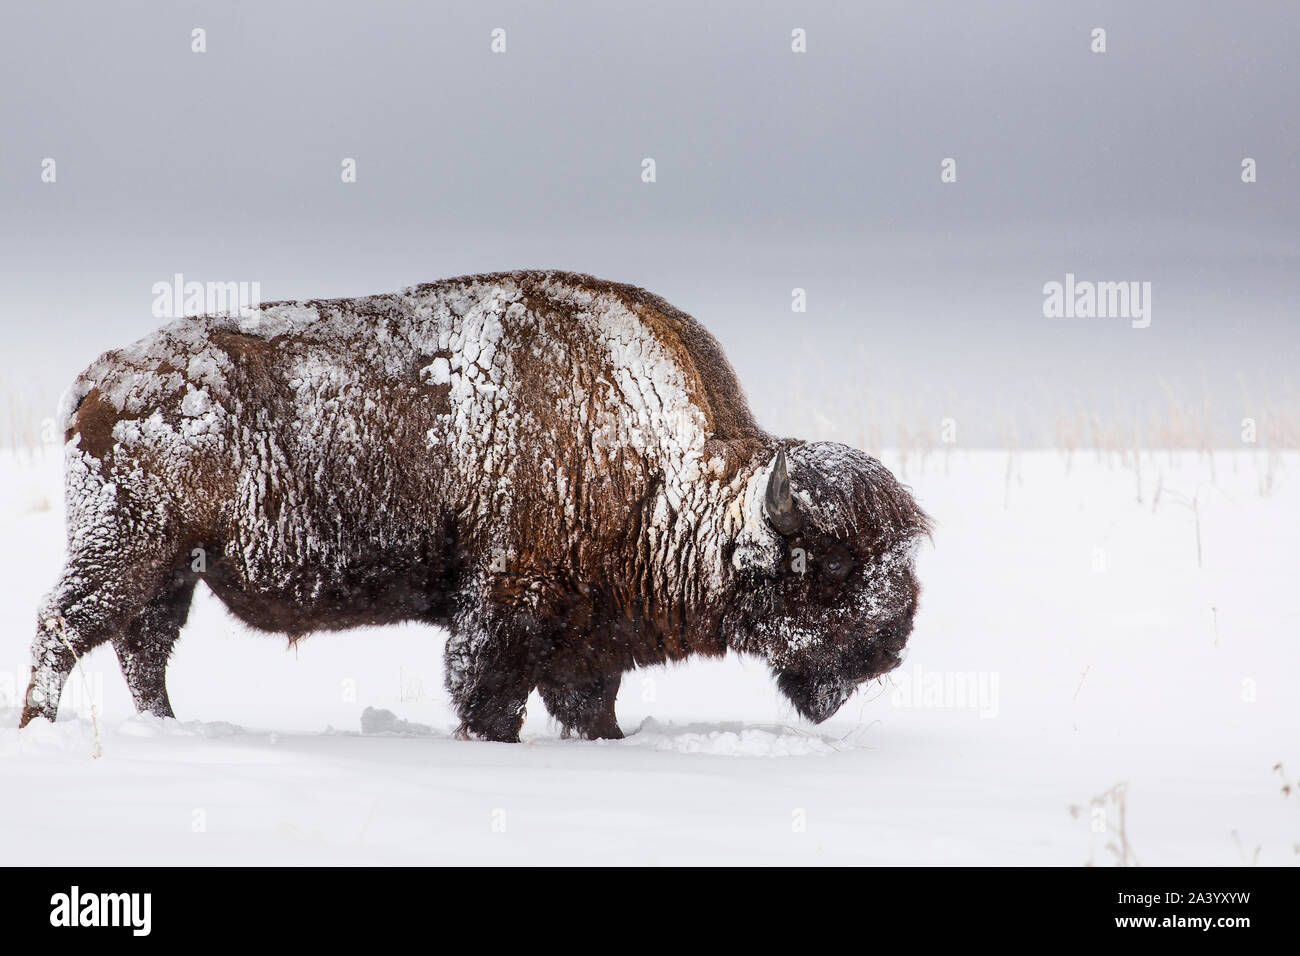 https://c8.alamy.com/comp/2A3YXYW/buffalo-in-snow-covered-field-2A3YXYW.jpg